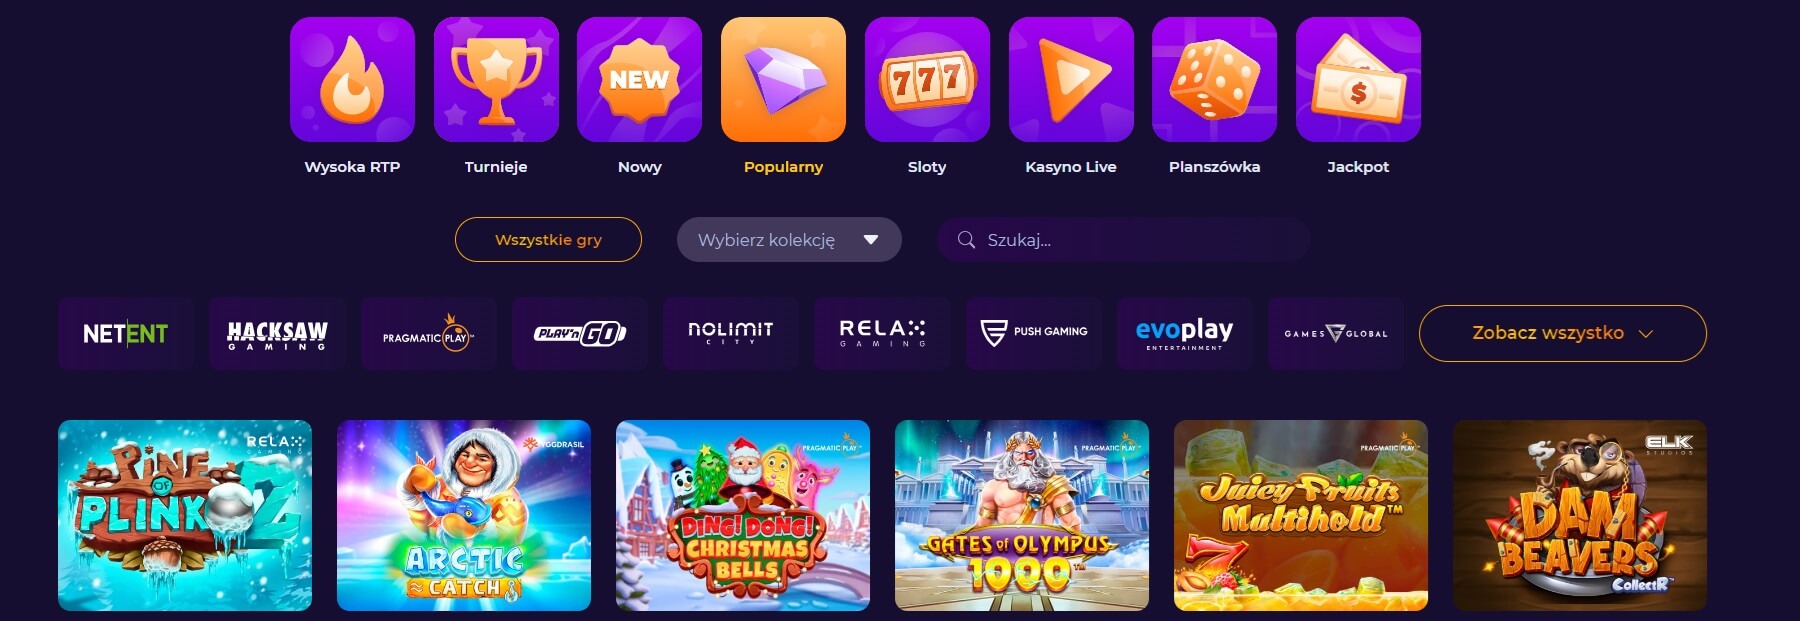 iWild Casino gry hazardowe screenshot